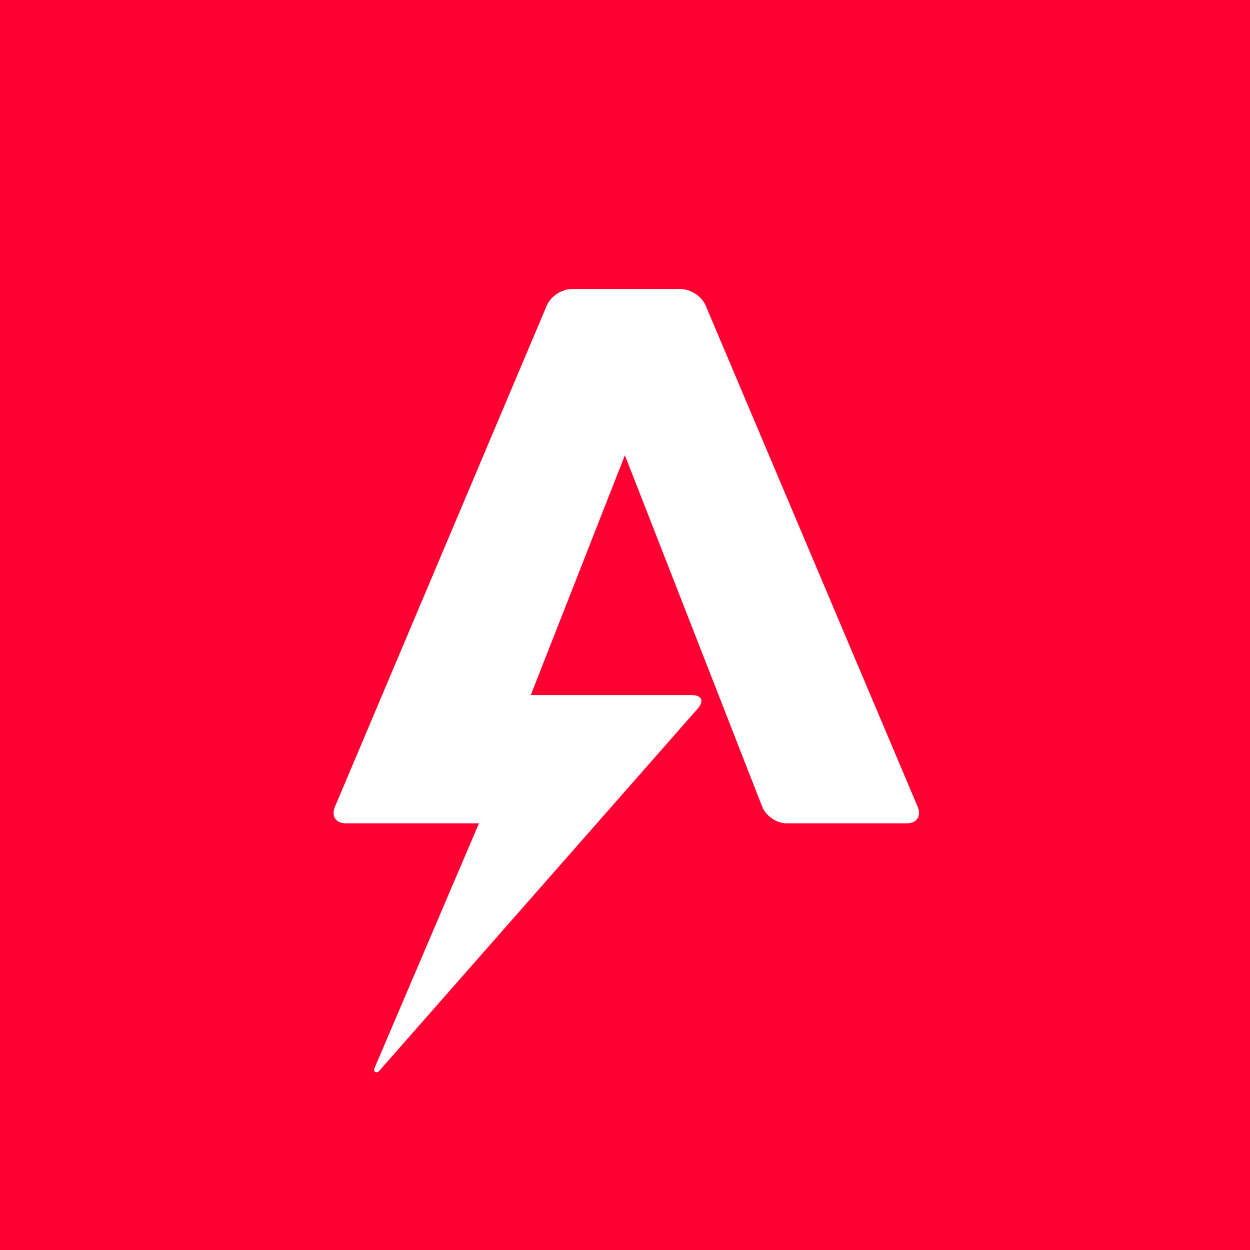 Using Red Square Logo - Assets | Astro Studios